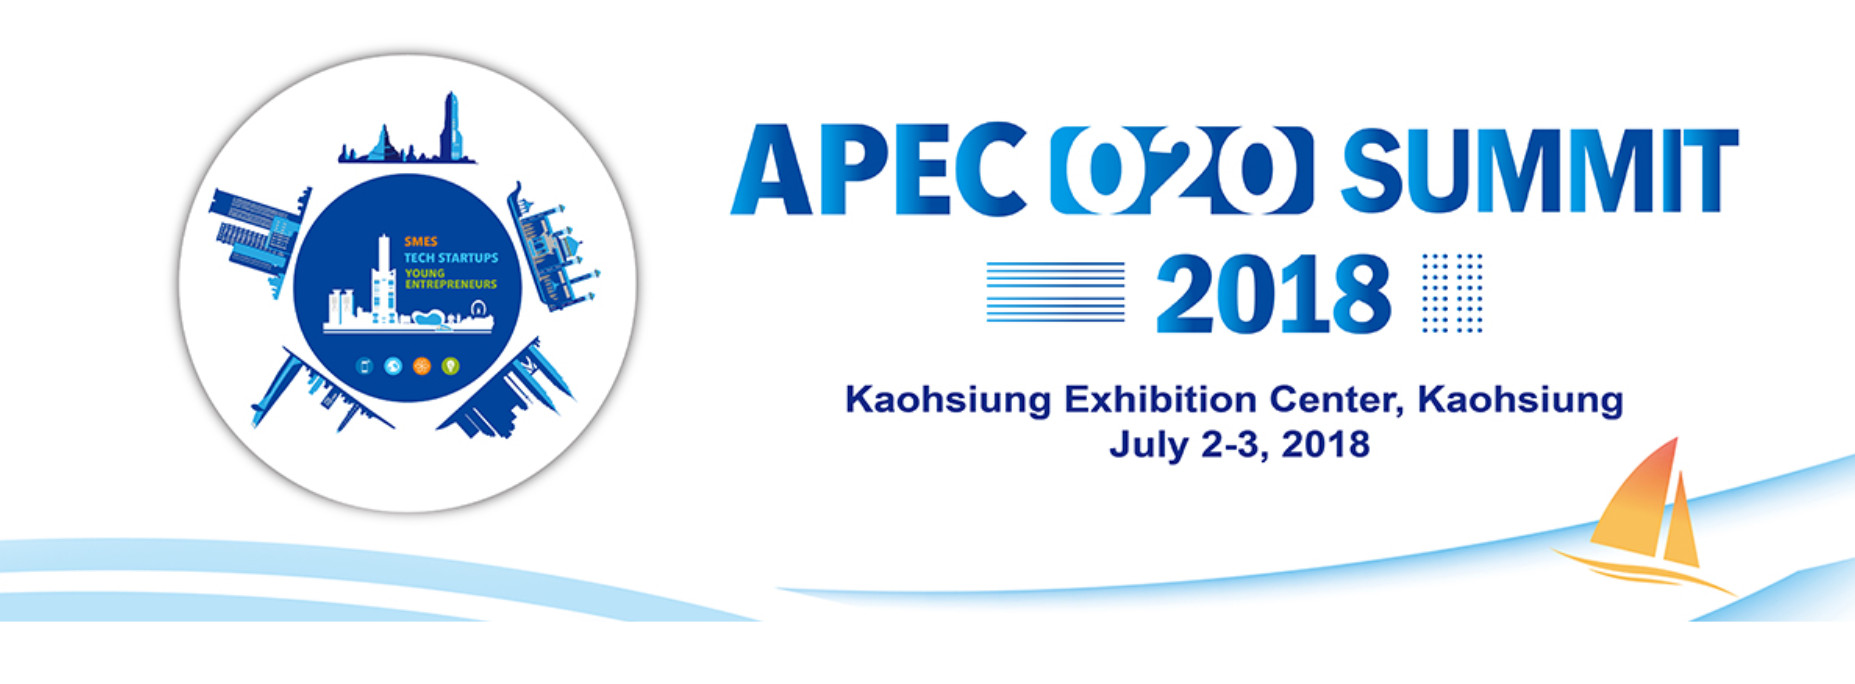 APEC O2O Summit 2018 - KAOHSIUNG 2018